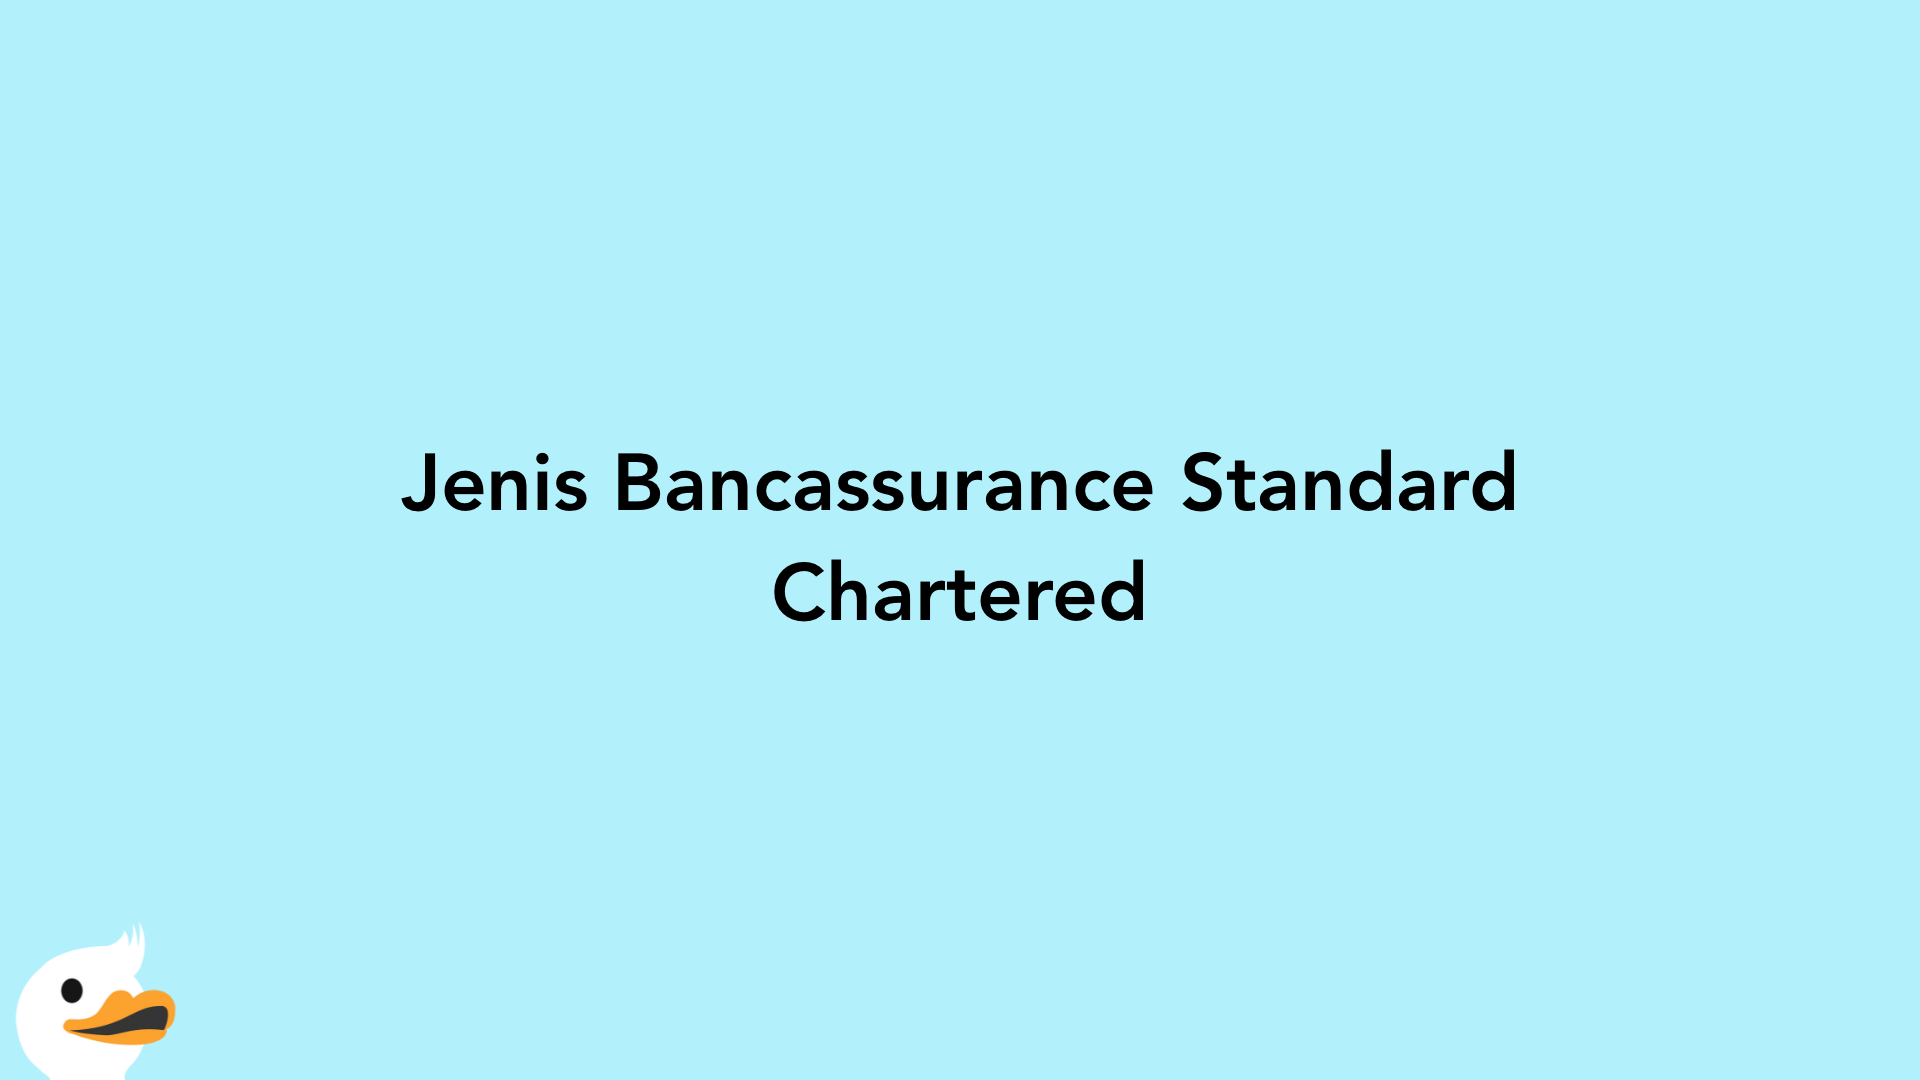 Jenis Bancassurance Standard Chartered